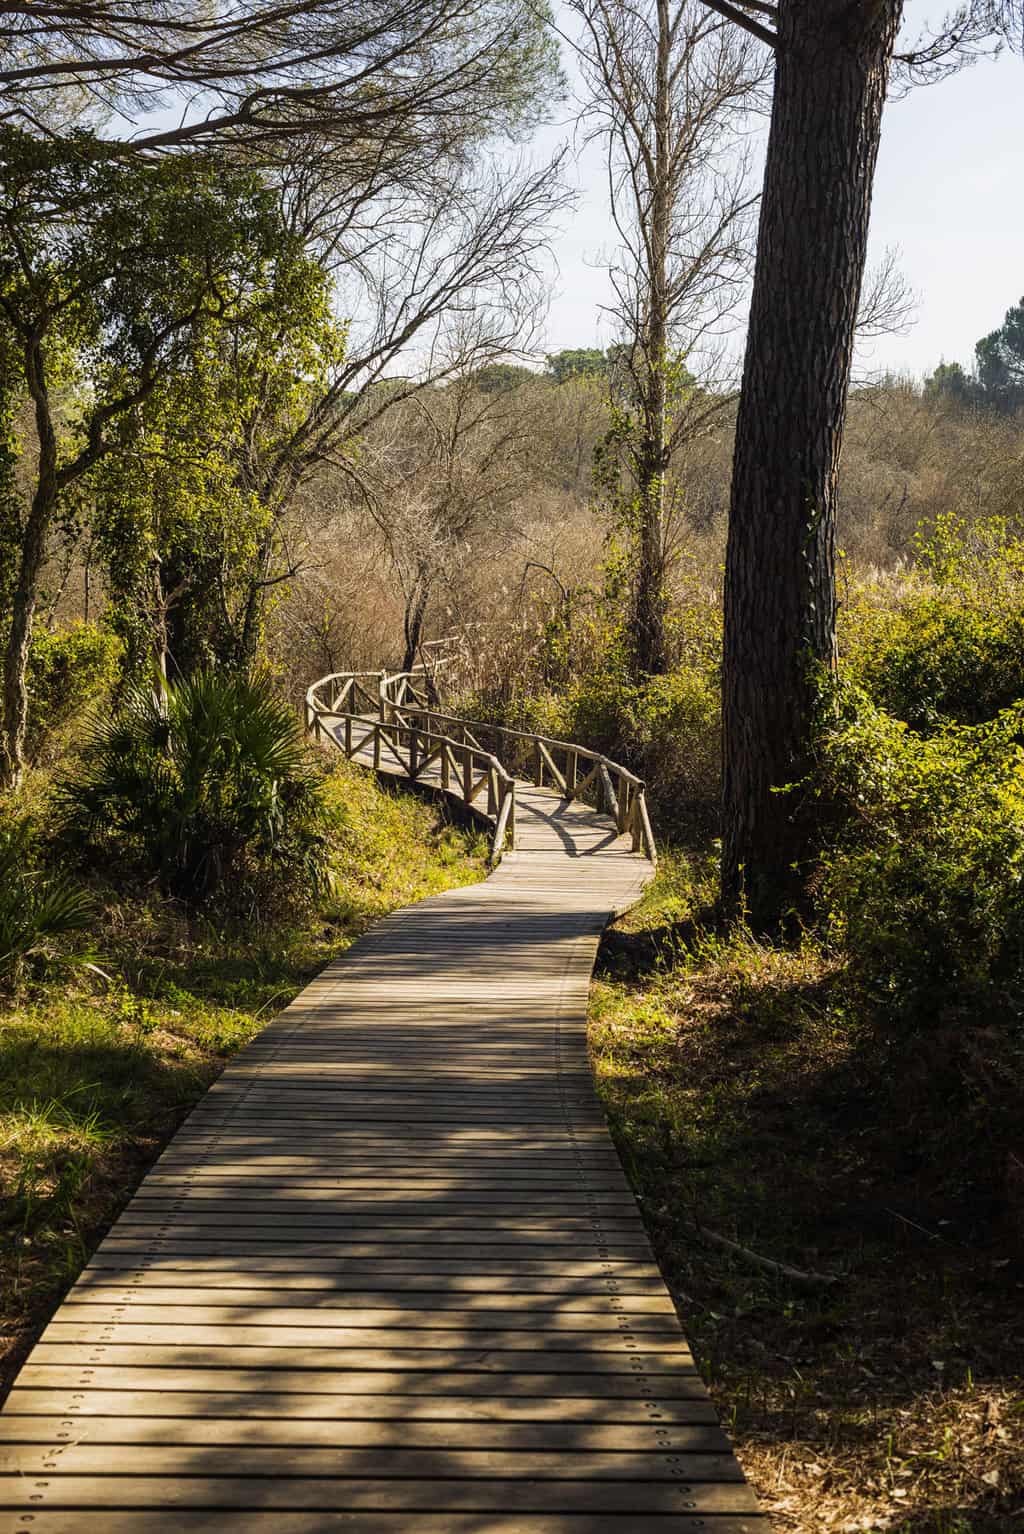 A narrow wooden footbridge winds through the Donana National Park.